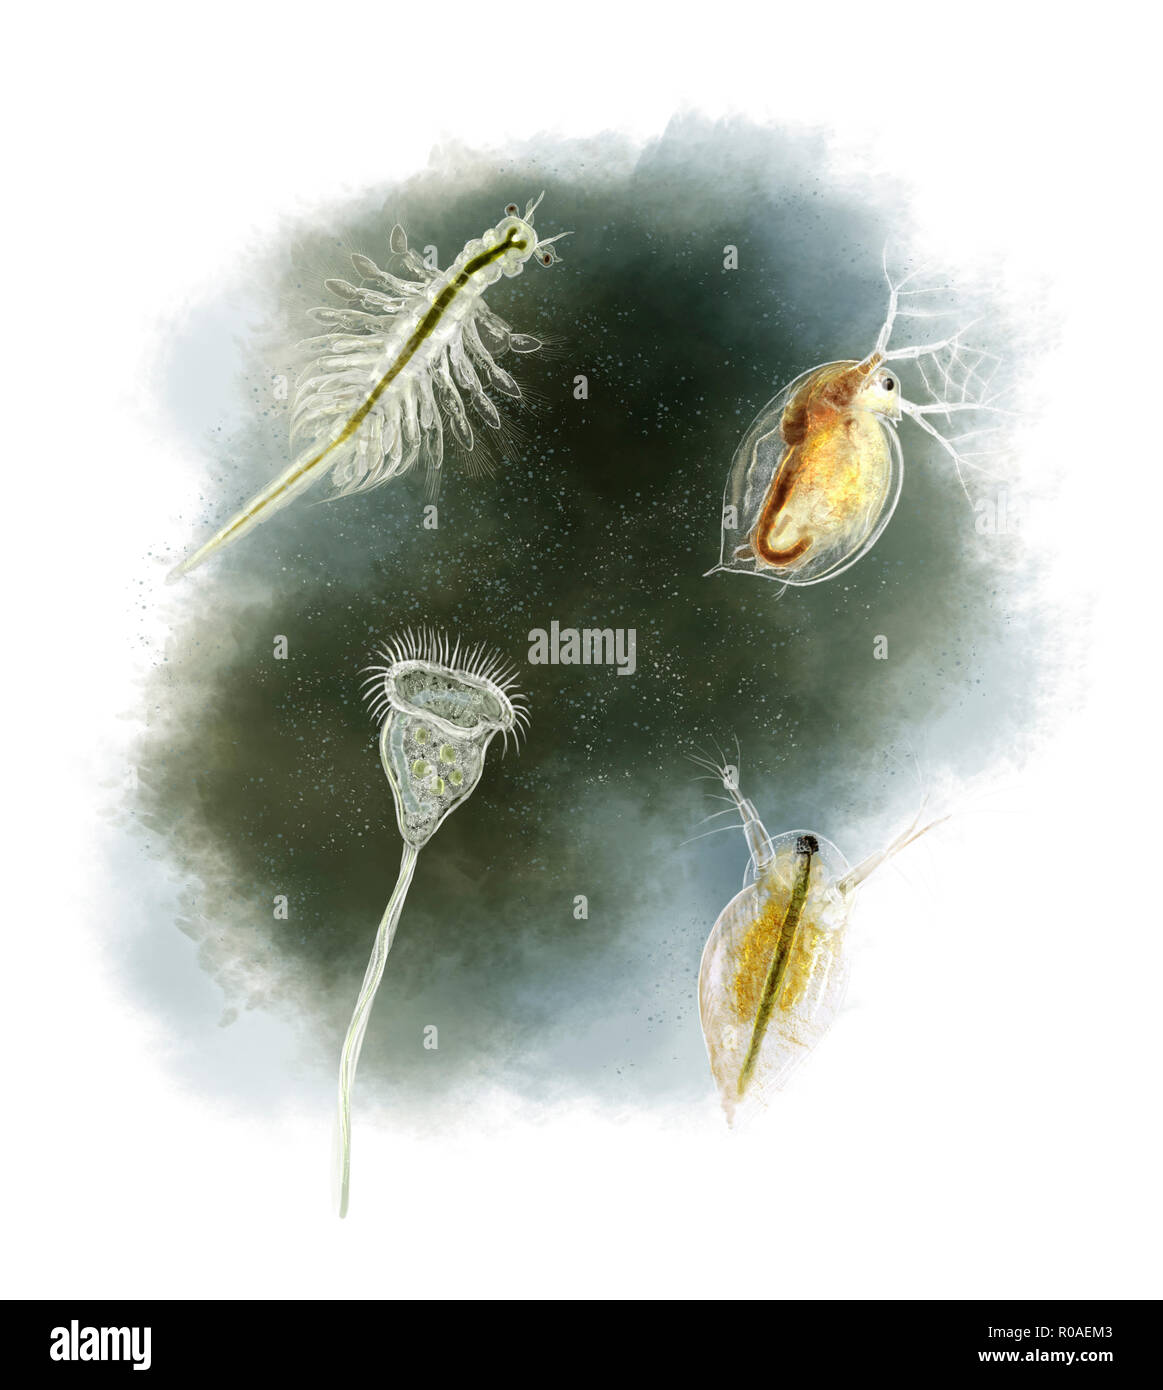 Digital illustration of a daphnia, vorticella and Brine shrimp Stock Photo